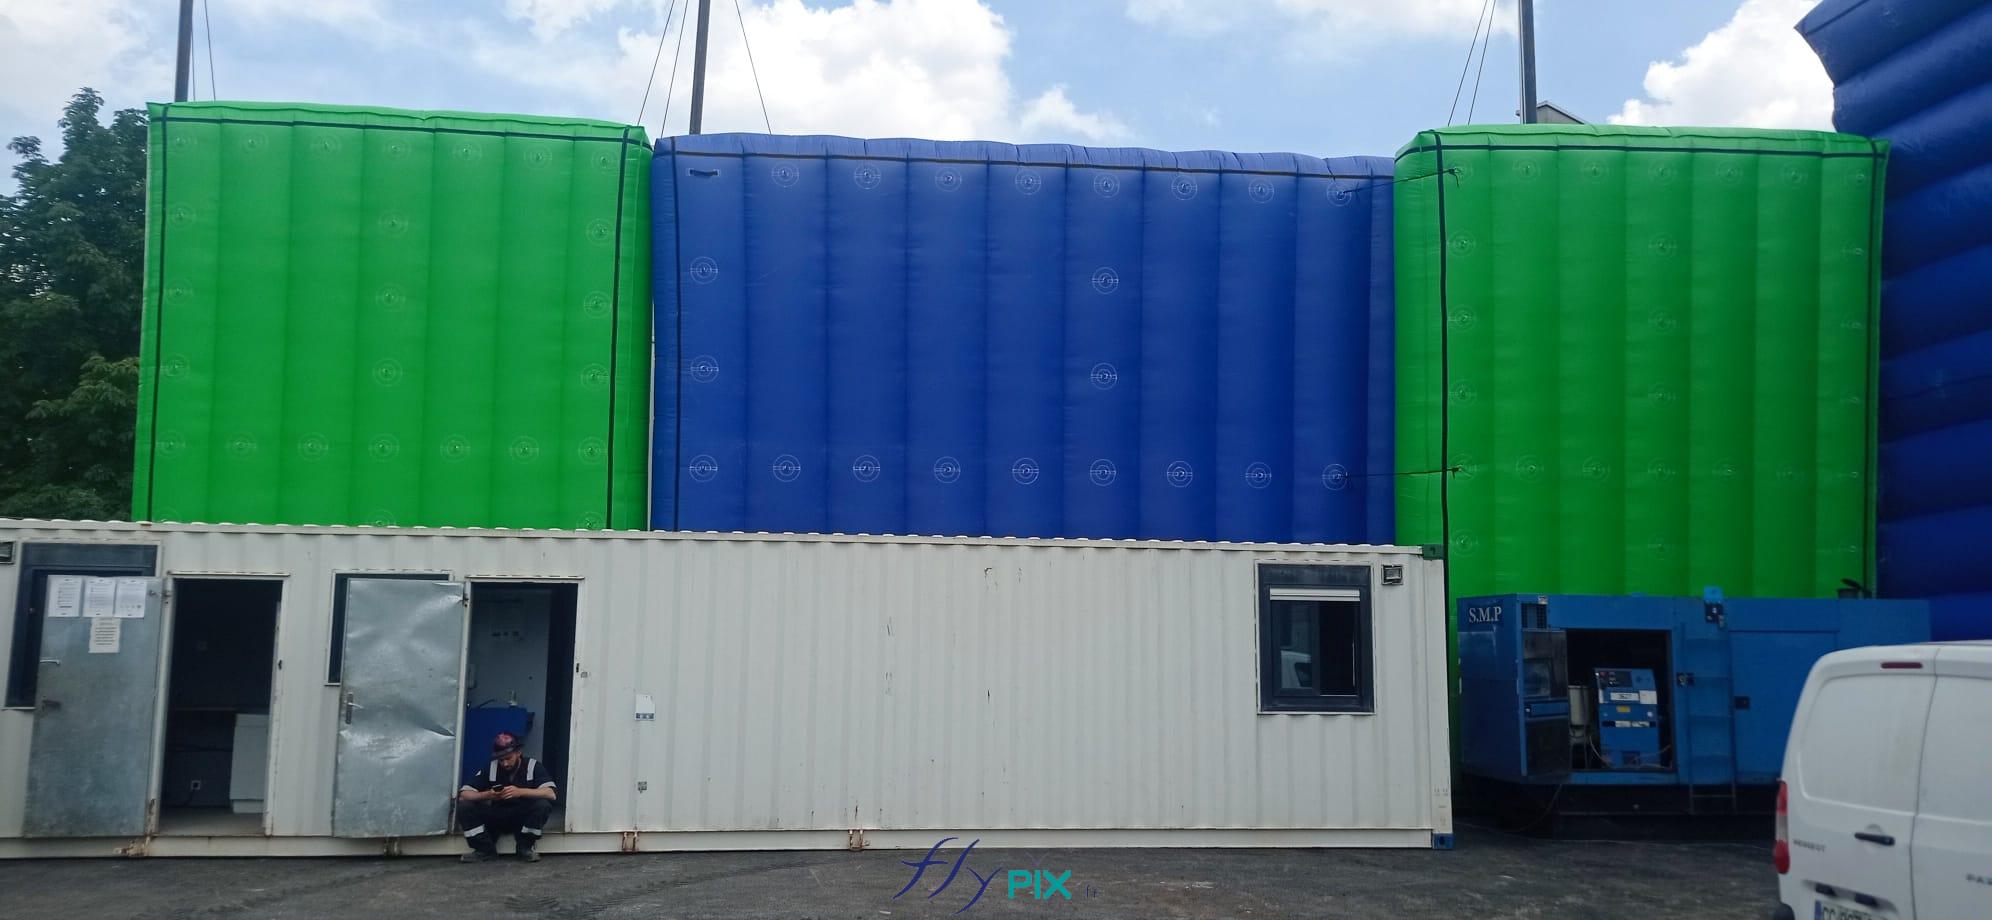 Chantier pose installation murs gonflables reduction bruits SMP DRILLING enveloppe PVC 045mm ventiles turbine permanence 5